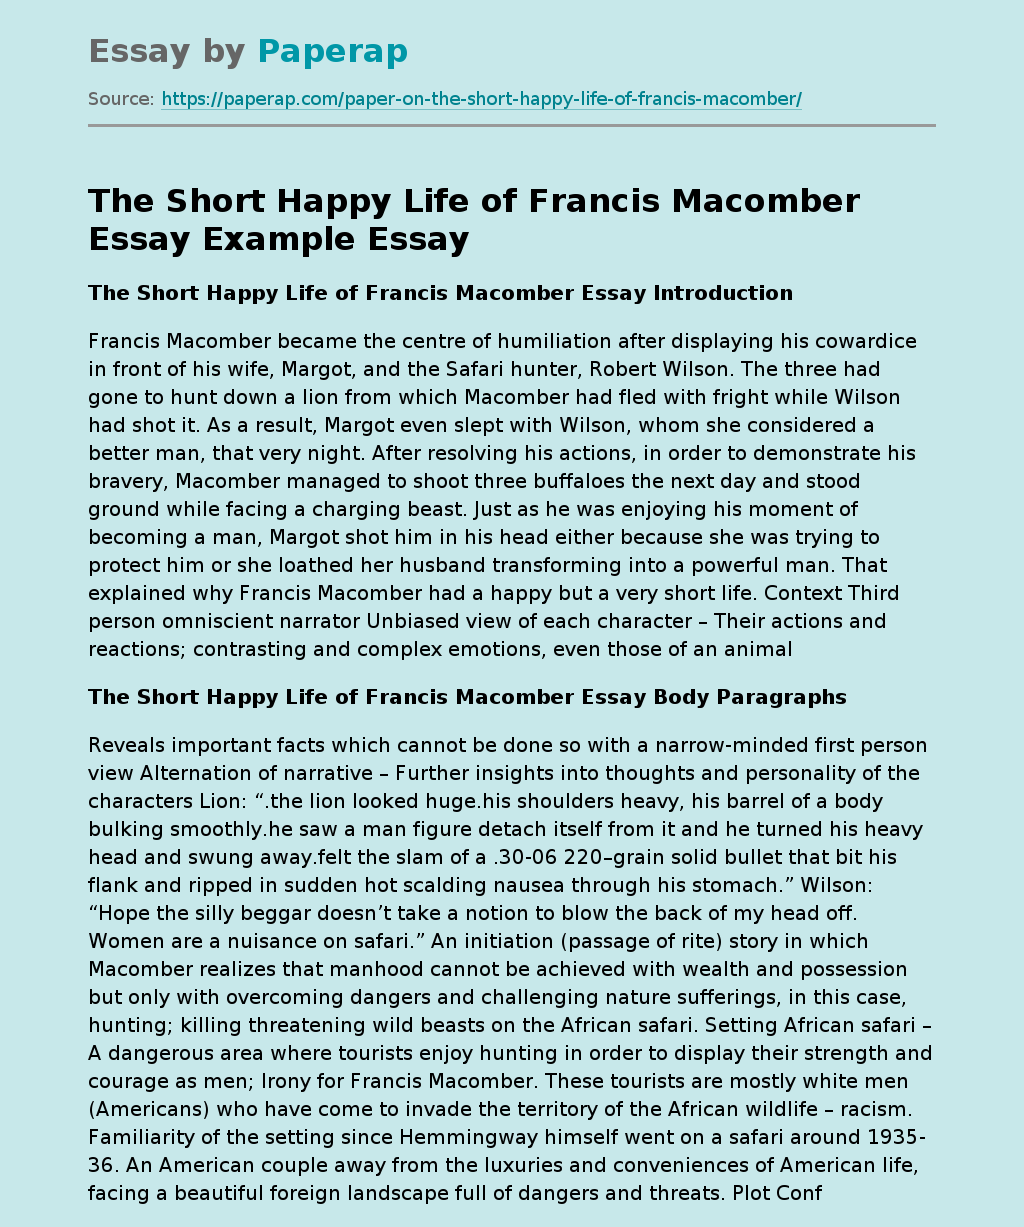 The Short Happy Life of Francis Macomber Essay Example